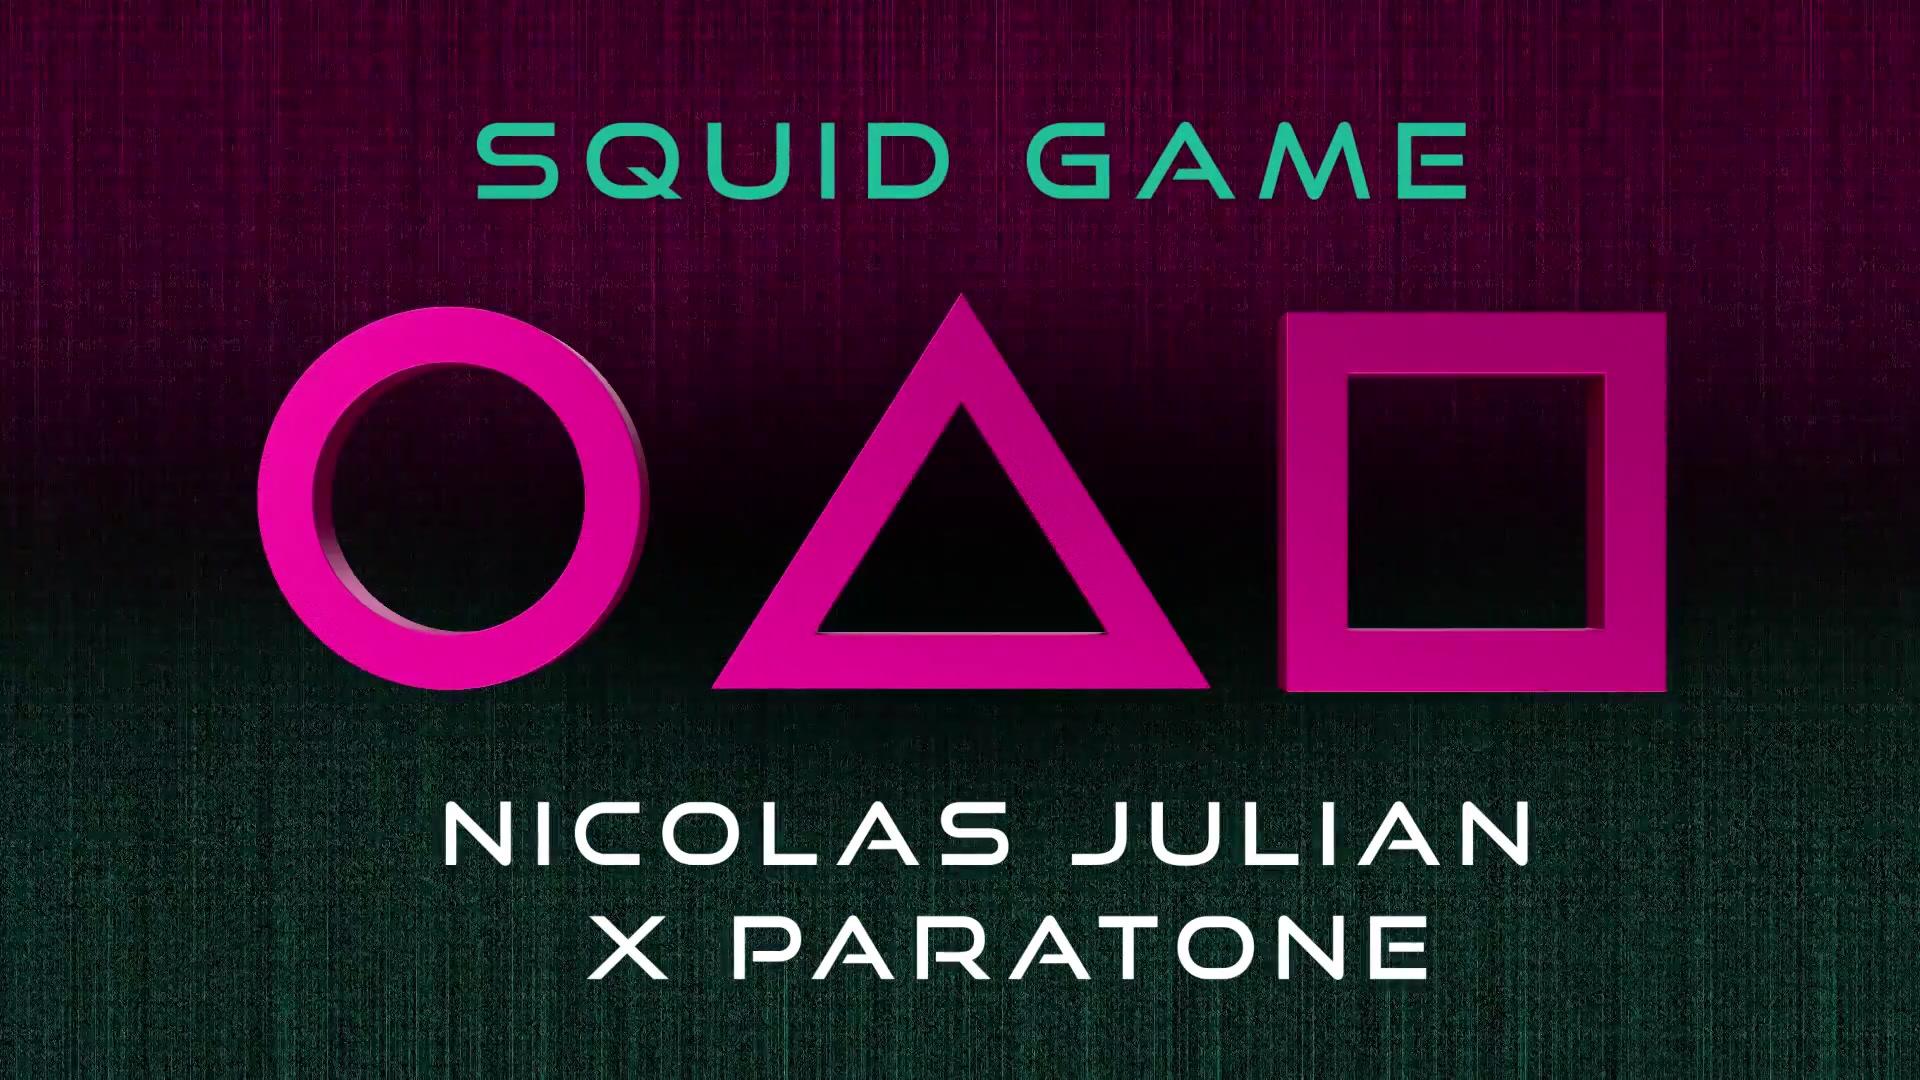 Nicolas Julian - Squid Game - The Original (Official Visualizer)